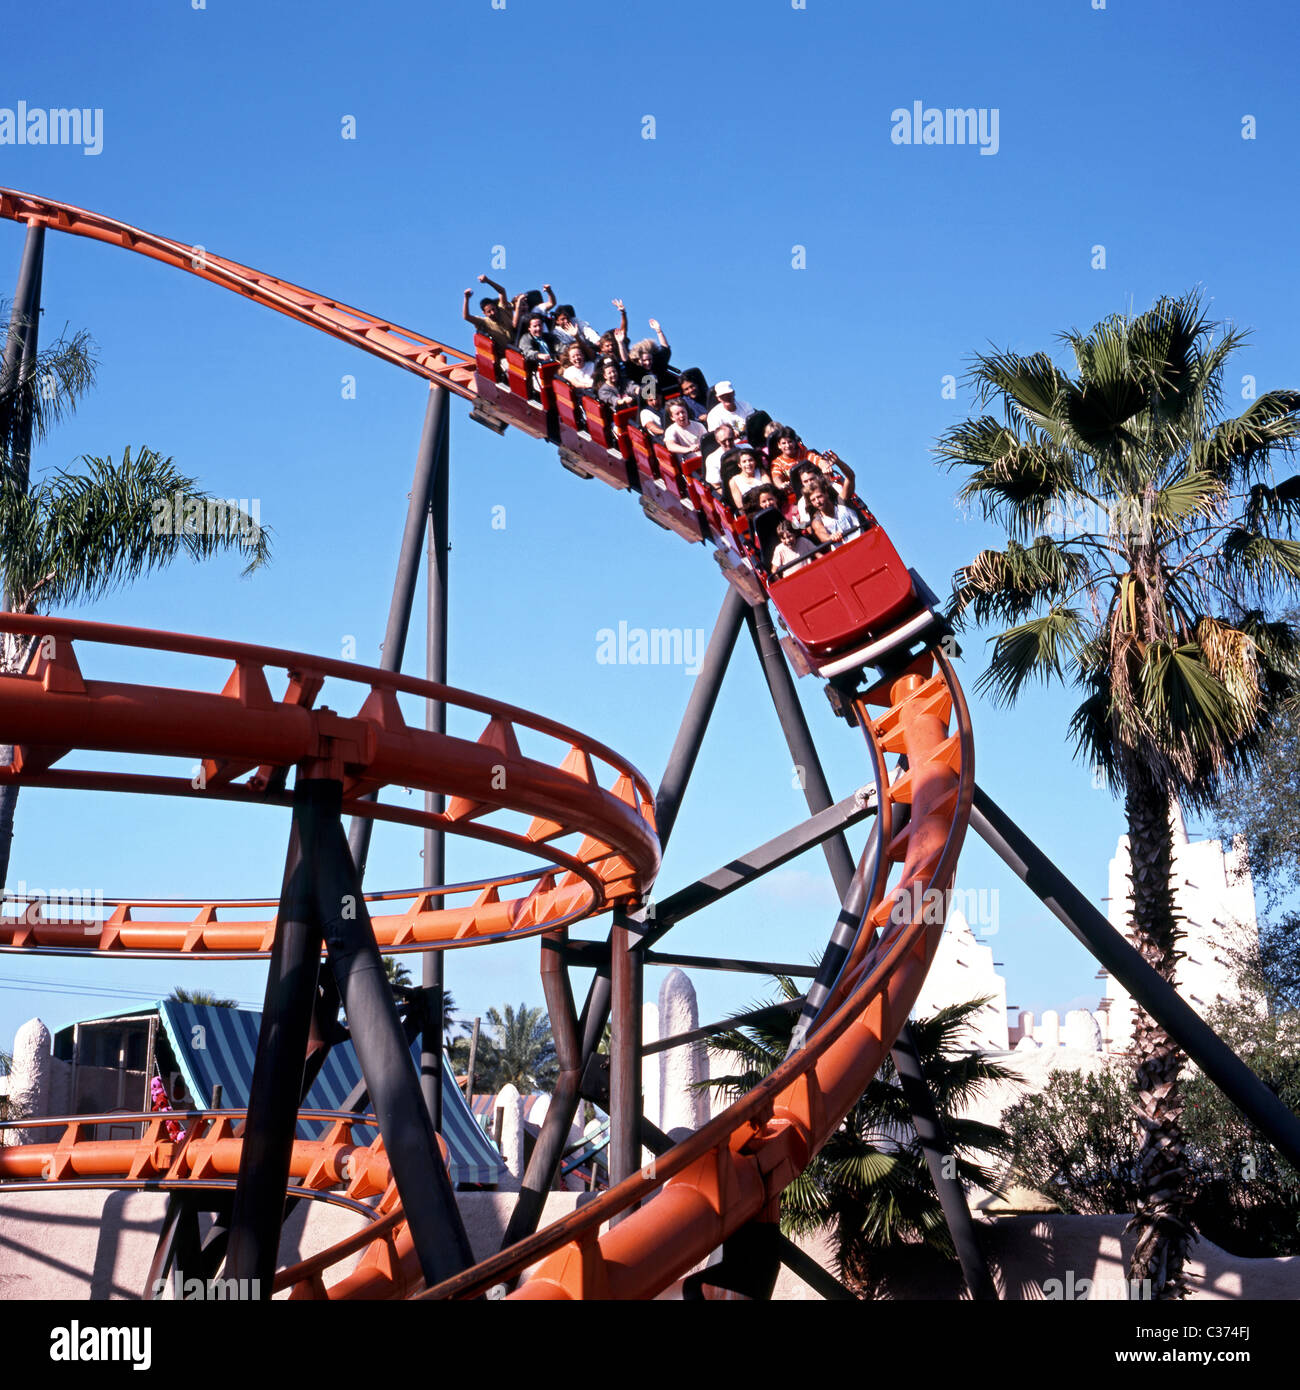 The Scorpion Roller Coaster Ride Busch Gardens Theme Park Tampa